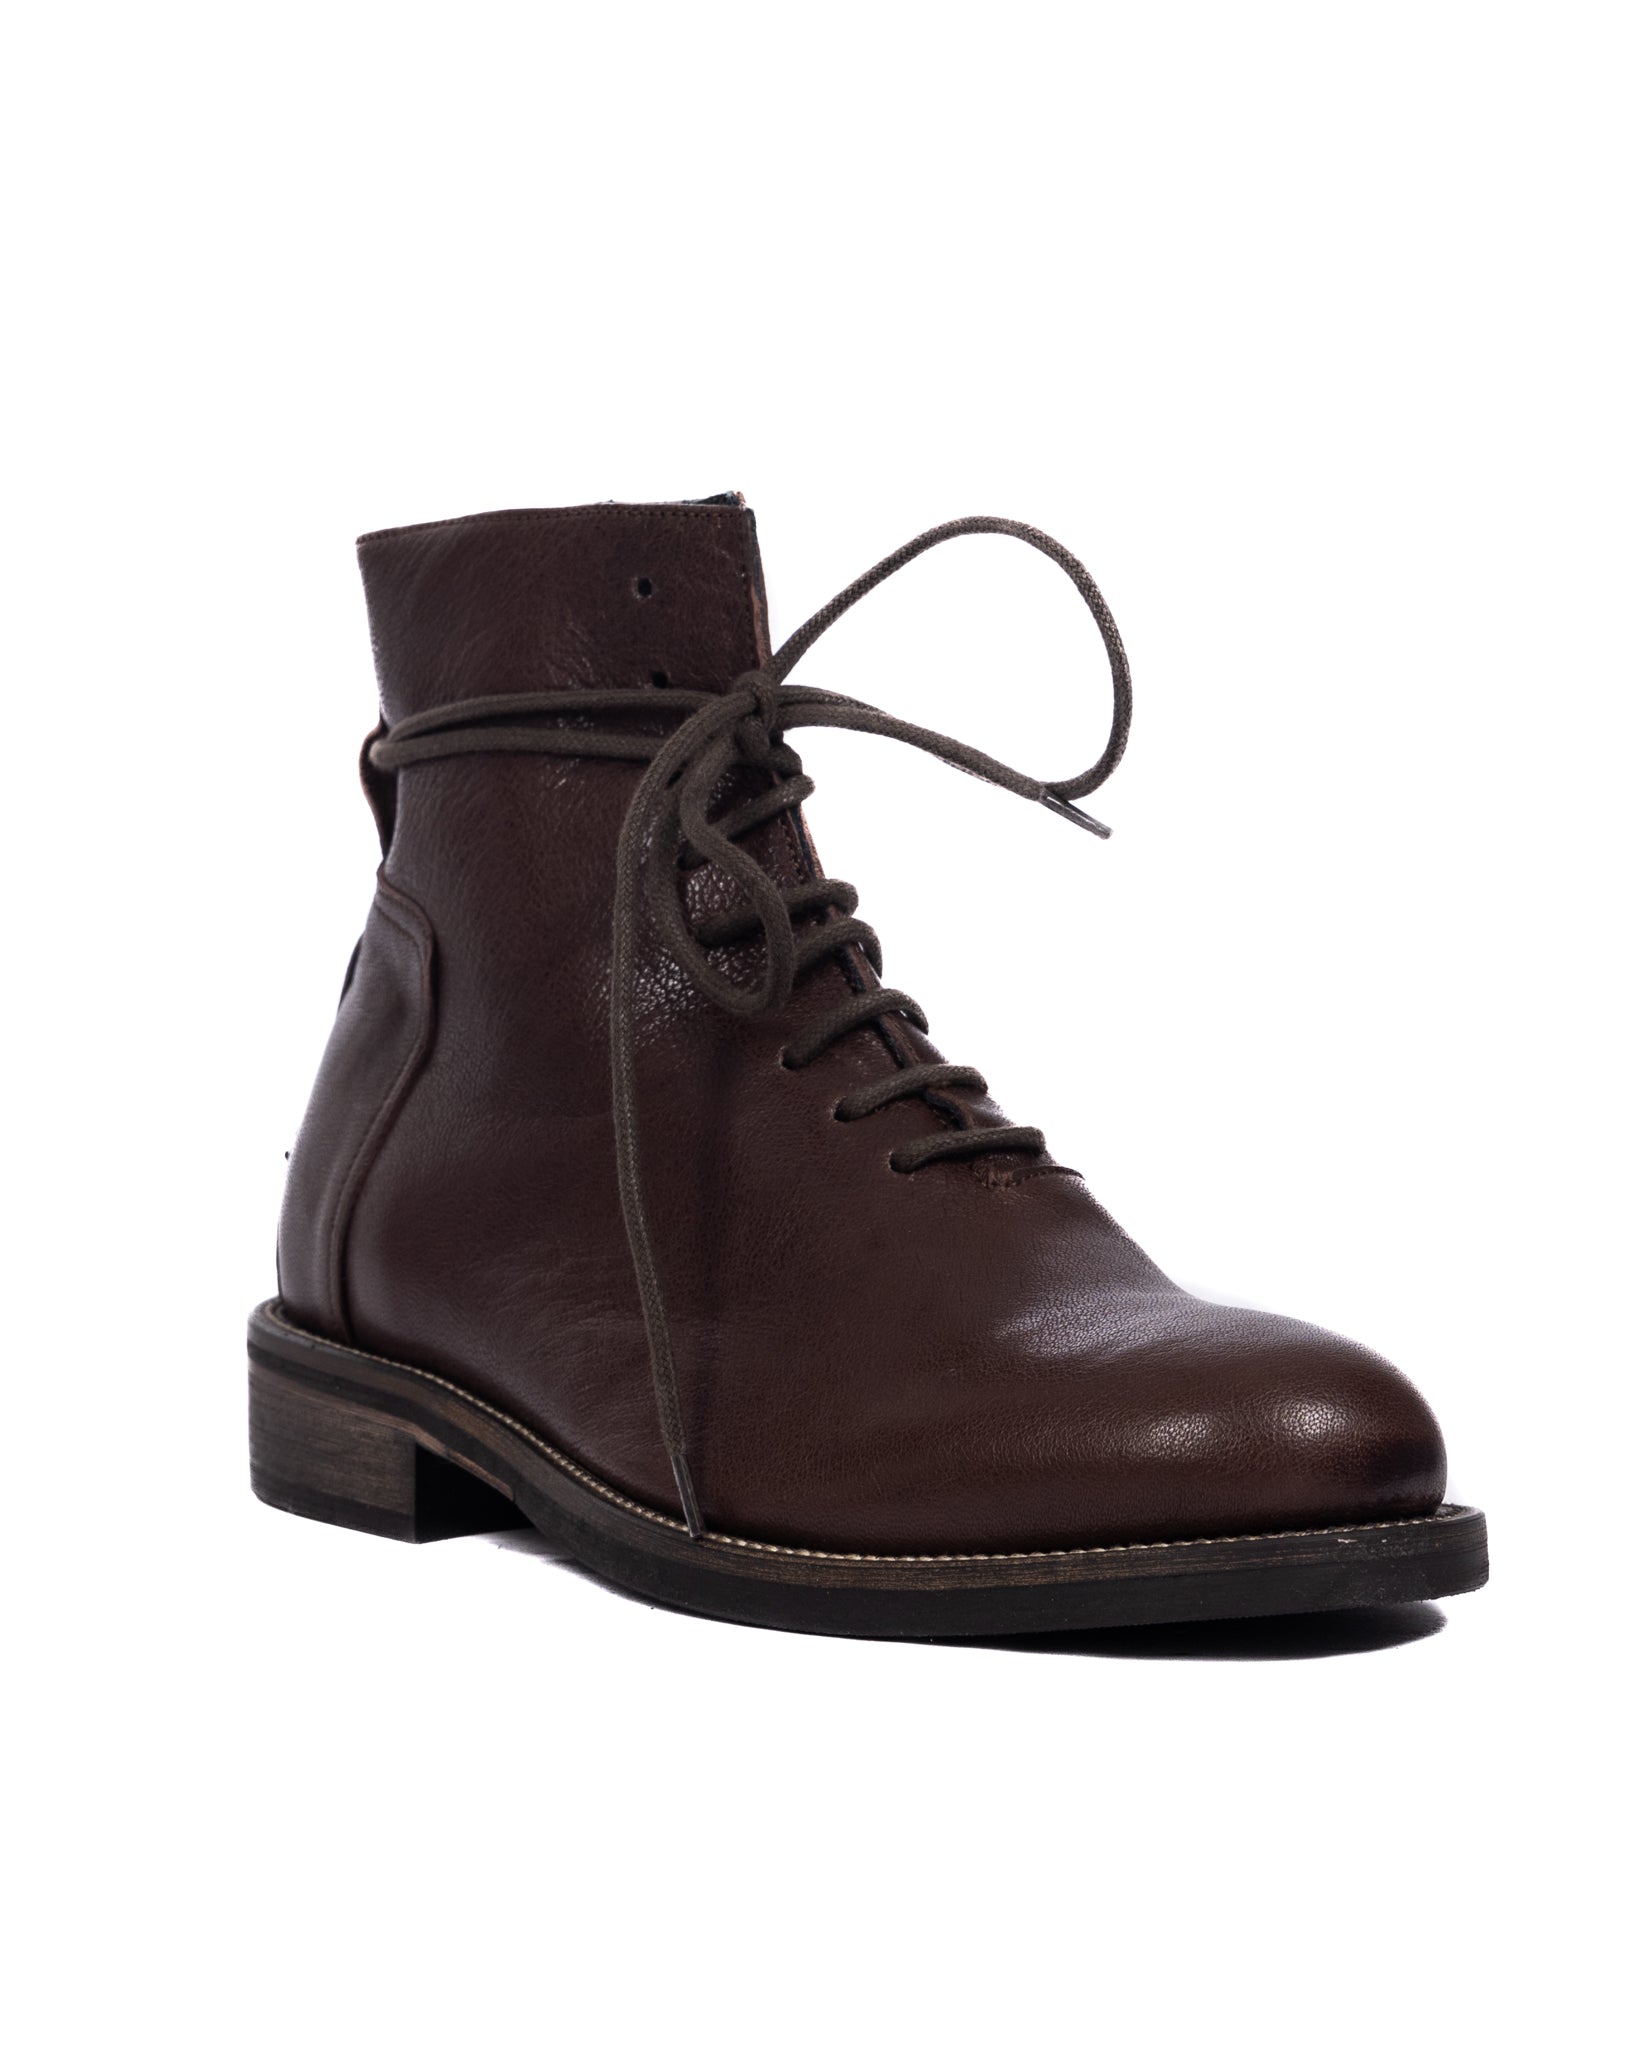 Houston - dark brown leather boot